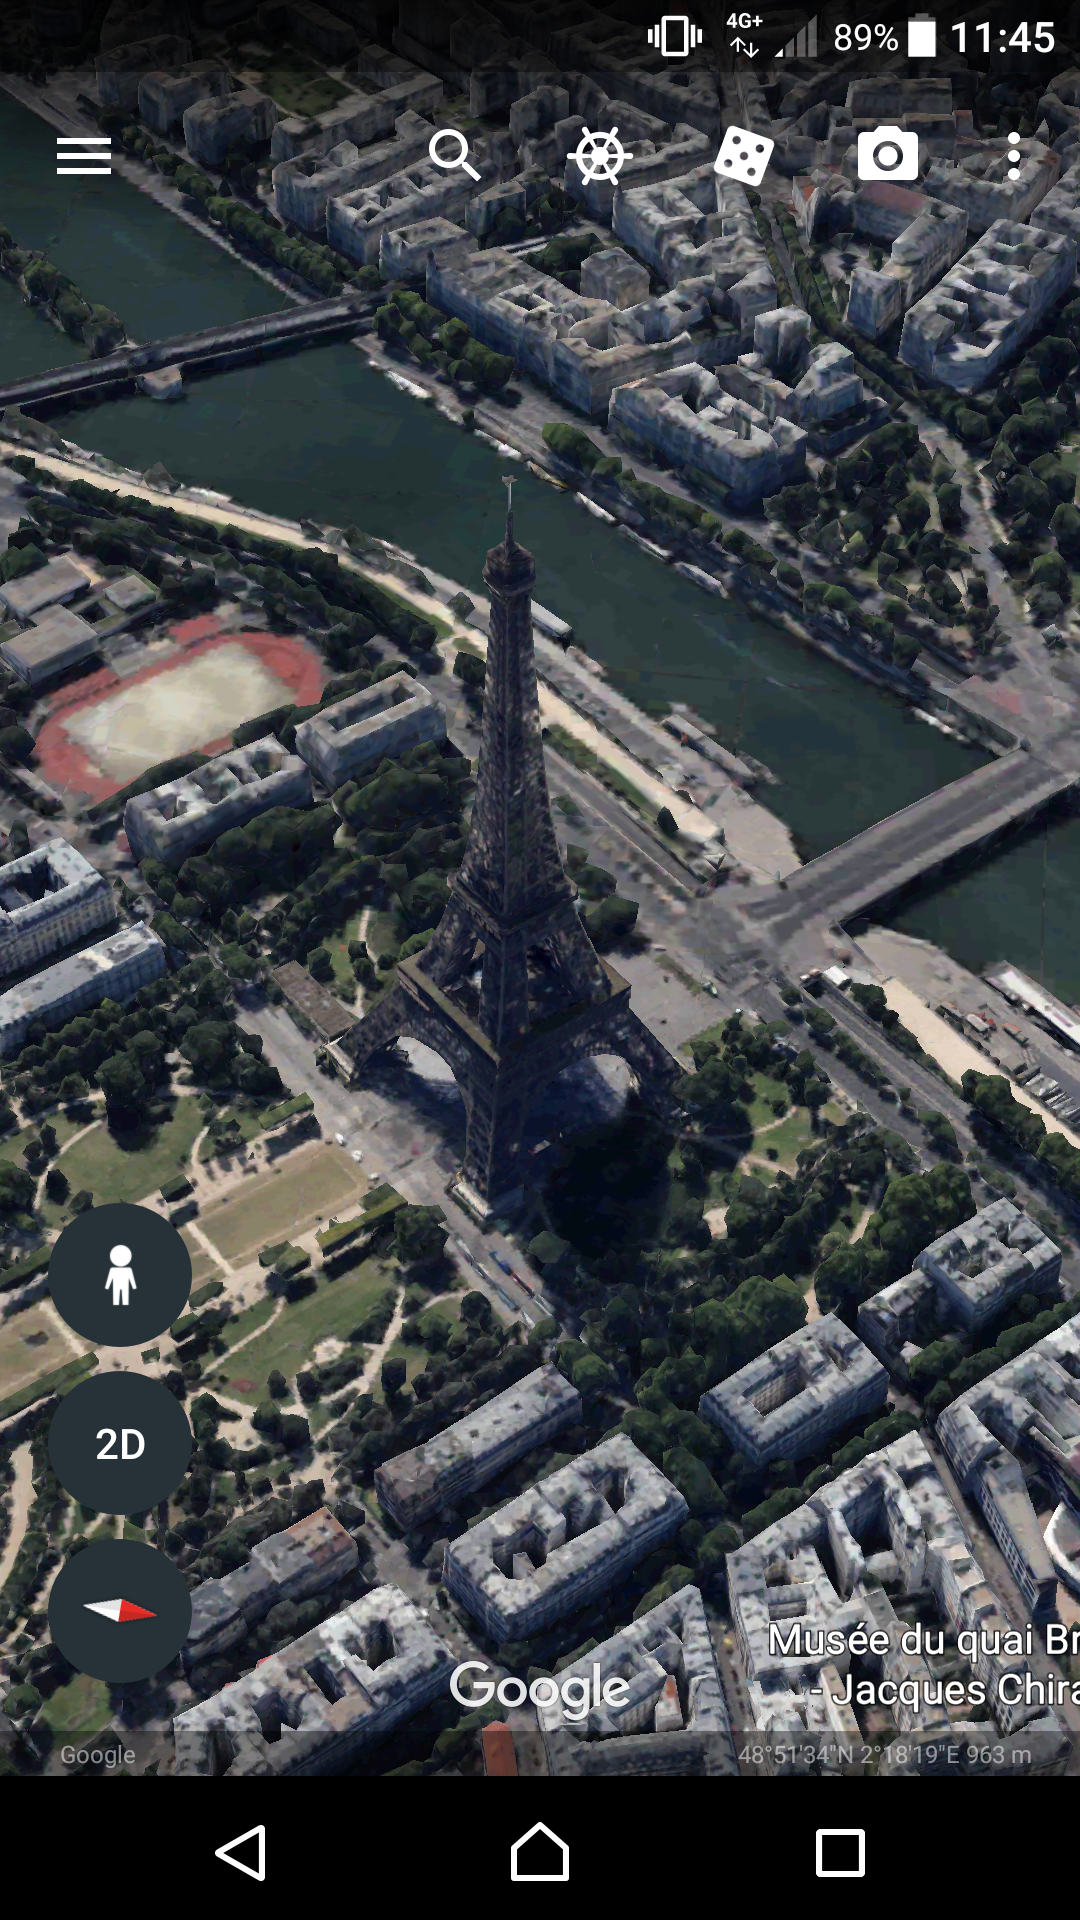 Так на Xperia XZs работает Google Earth